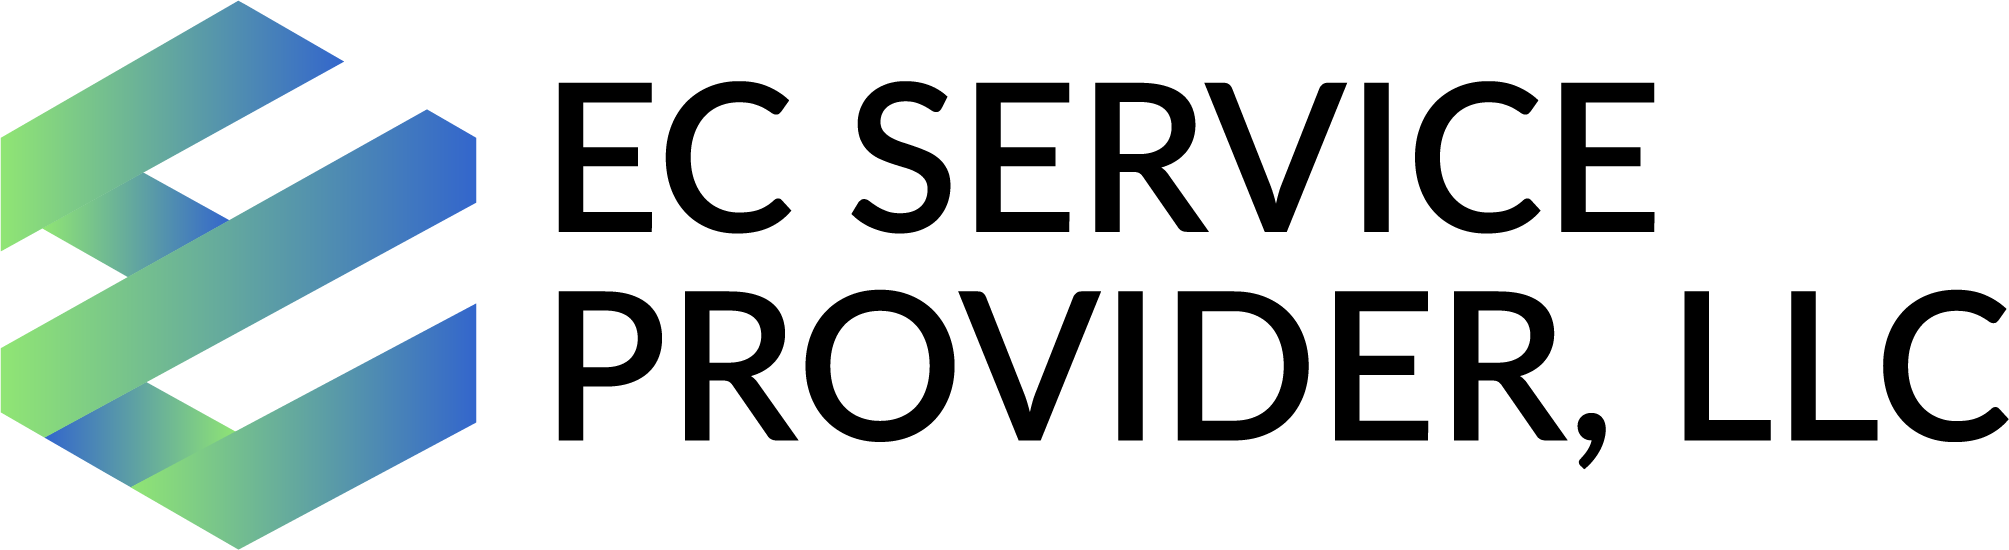 EC Service Provider, LLC logo